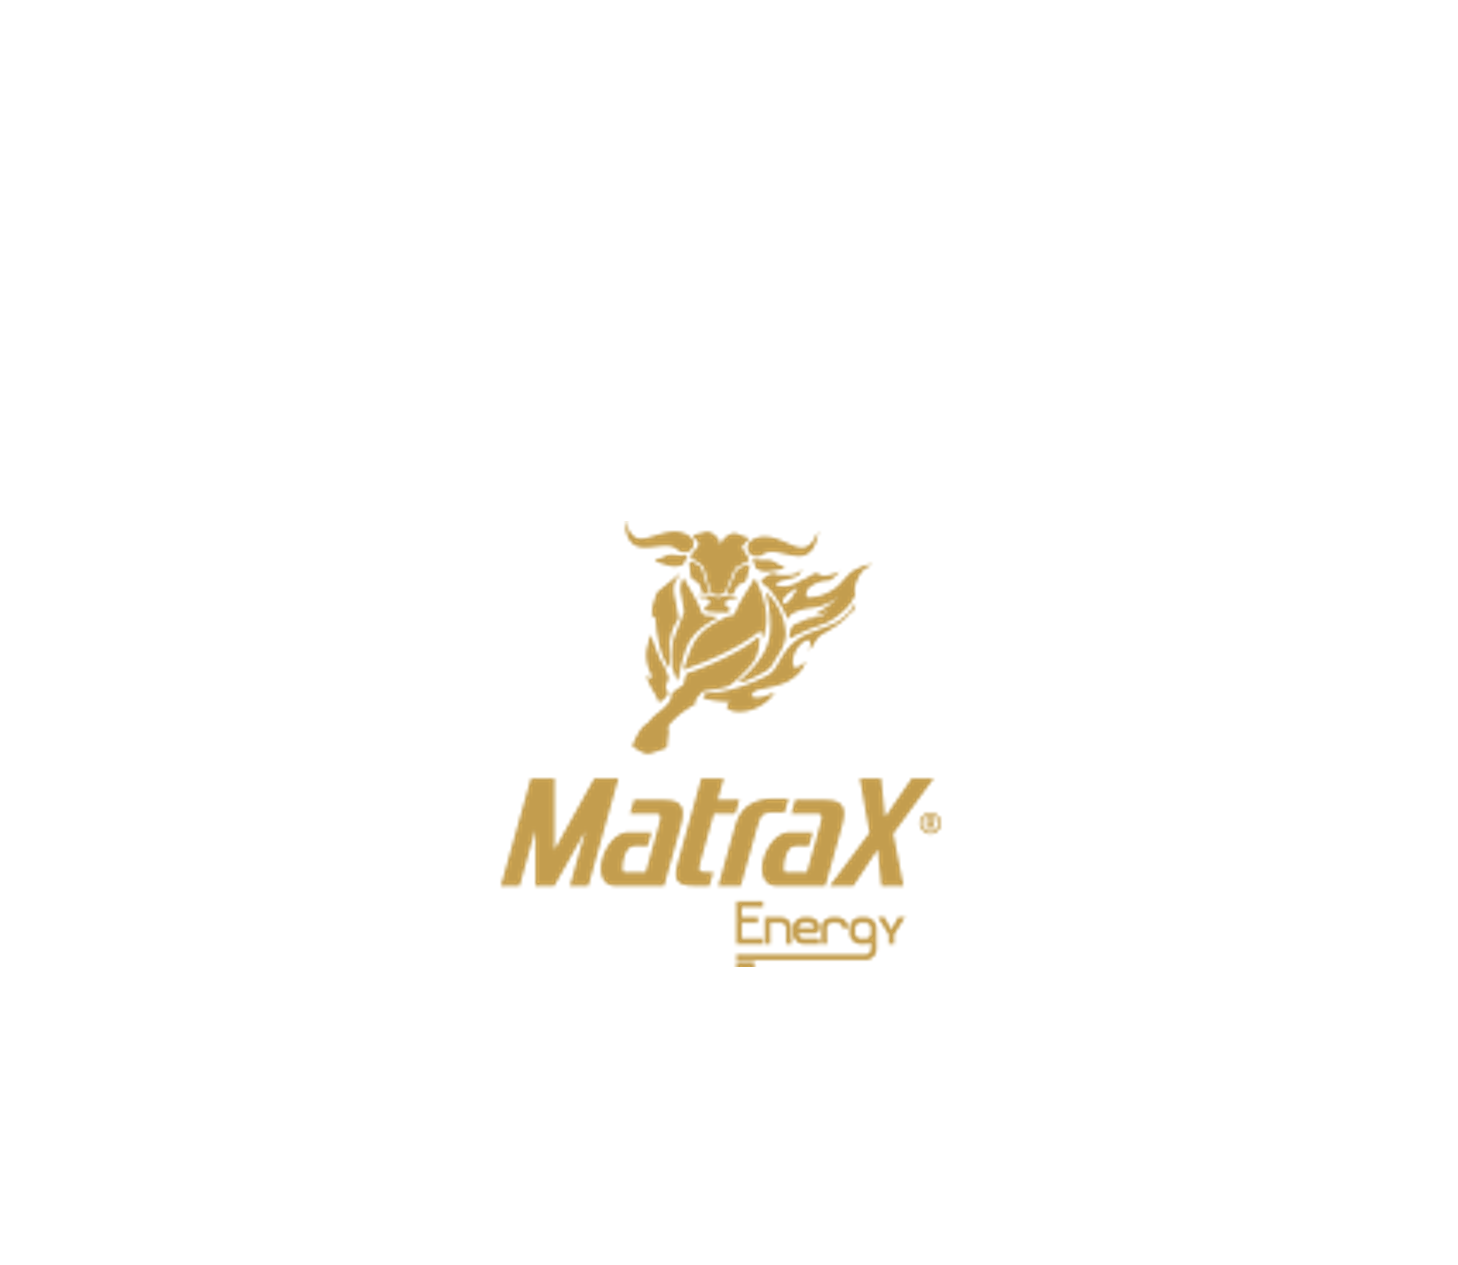 Parceiro MatraX Energy